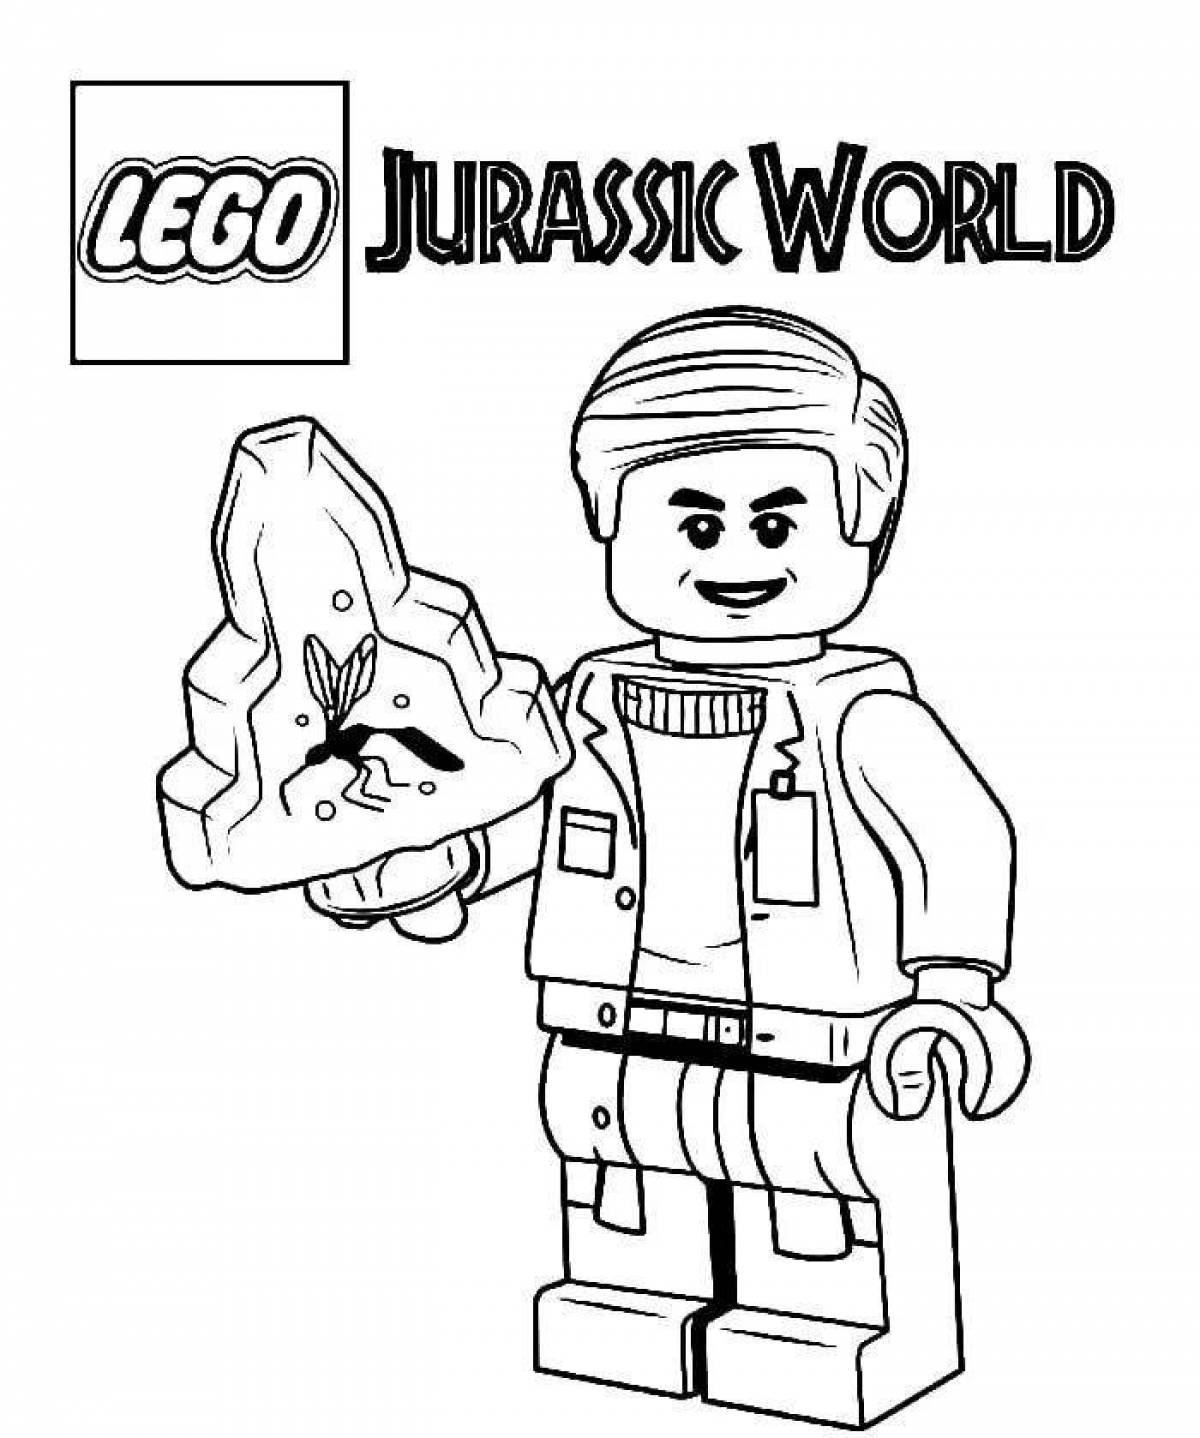 Adorable lego dinosaur coloring page